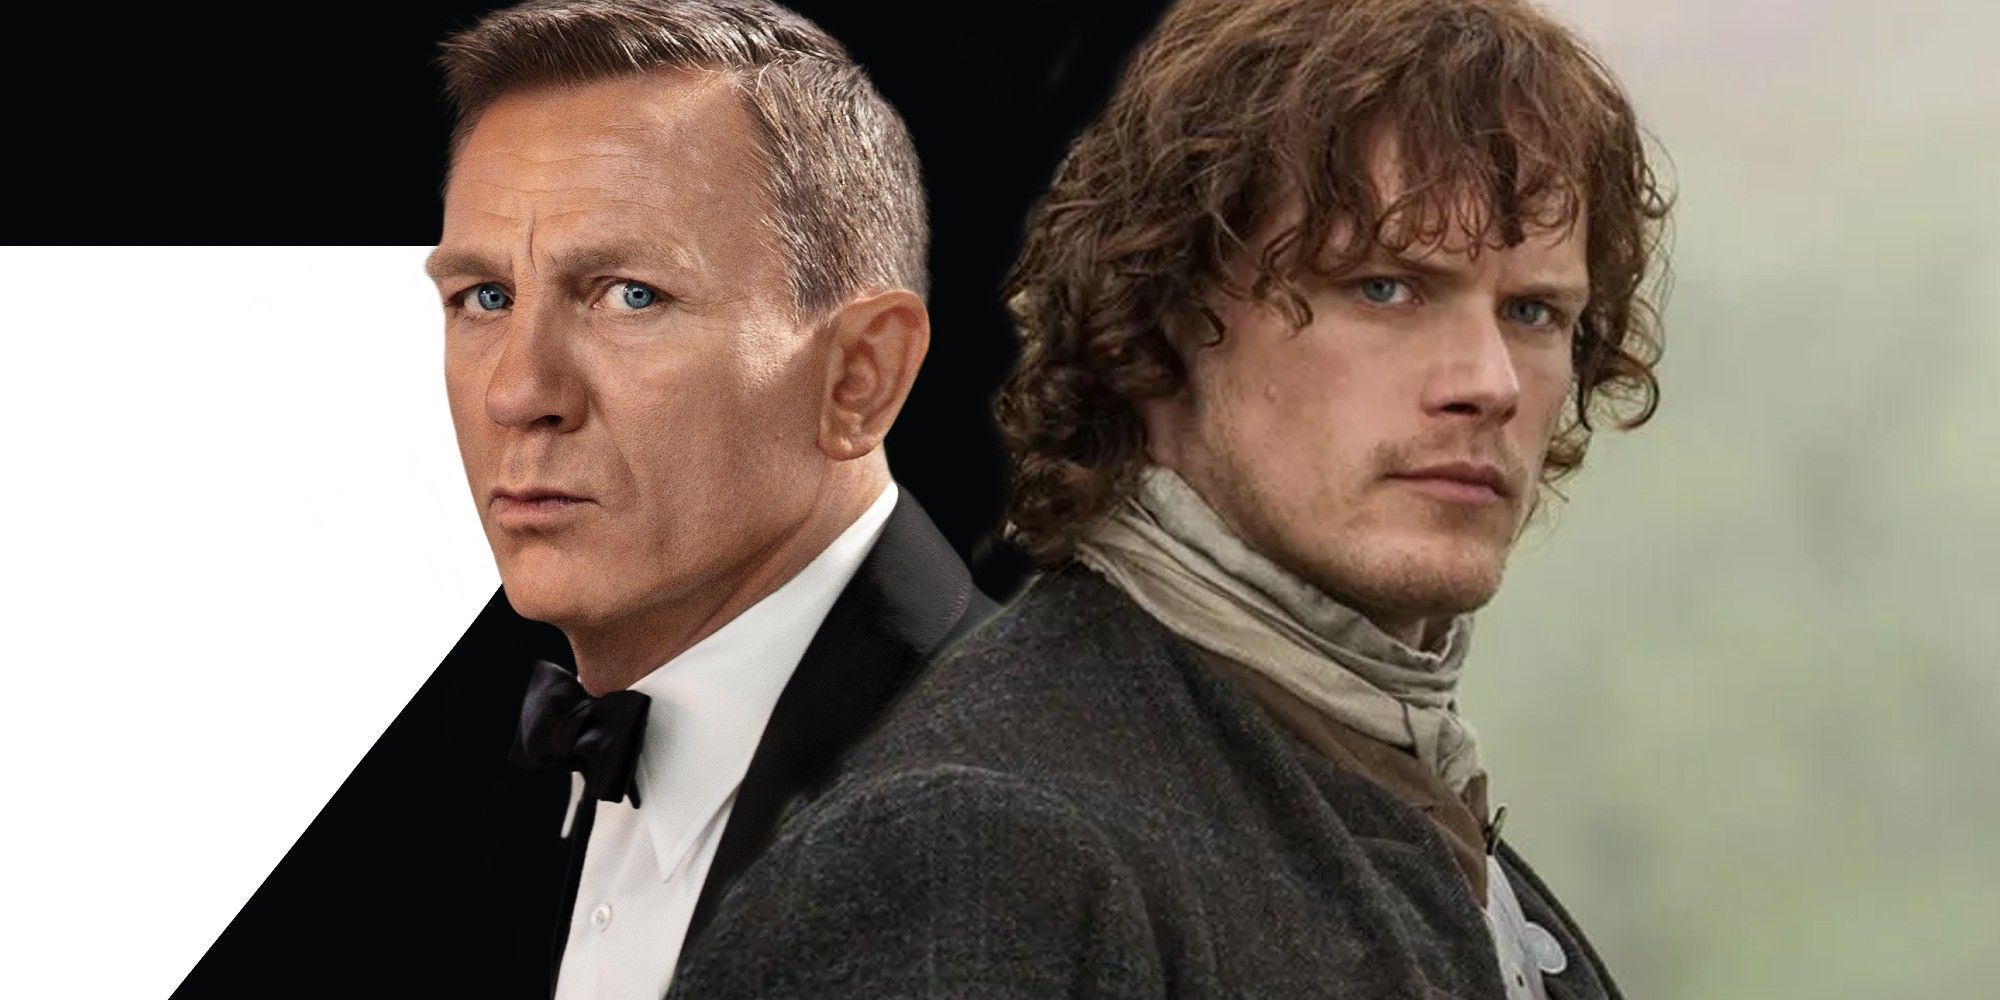 James Bond Outlanders Sam Heughan Discusses Losing Role To Daniel Craig